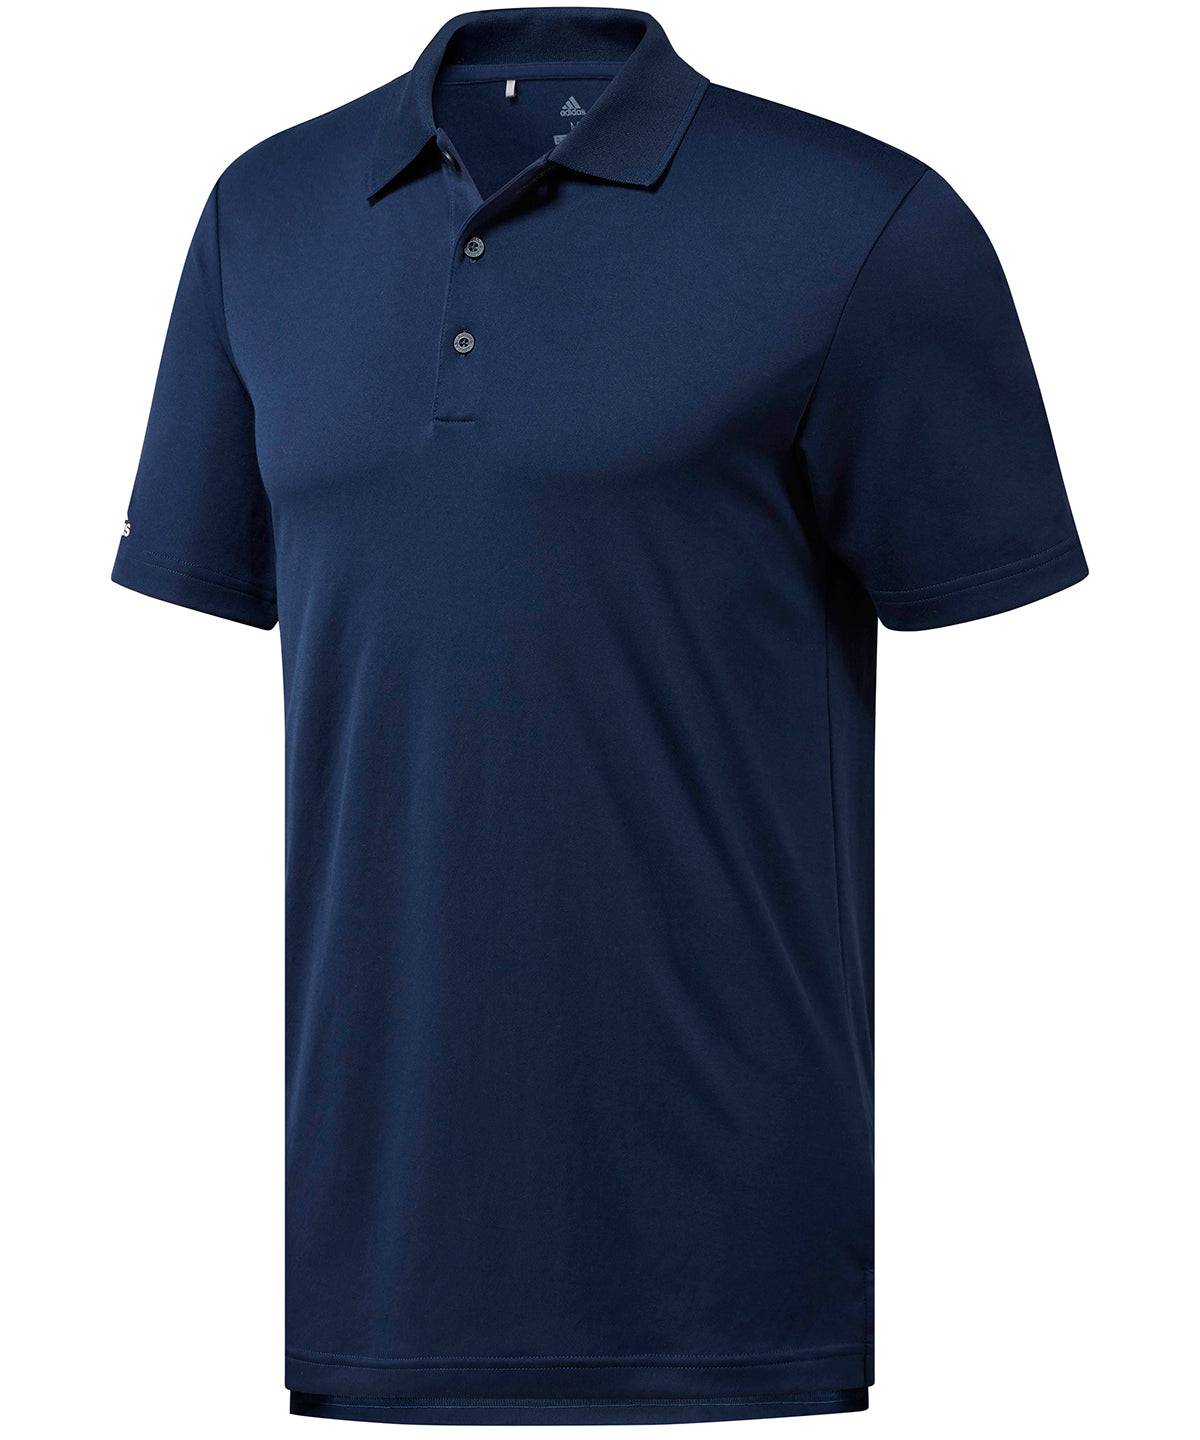 Collegiate Navy - Performance polo shirt